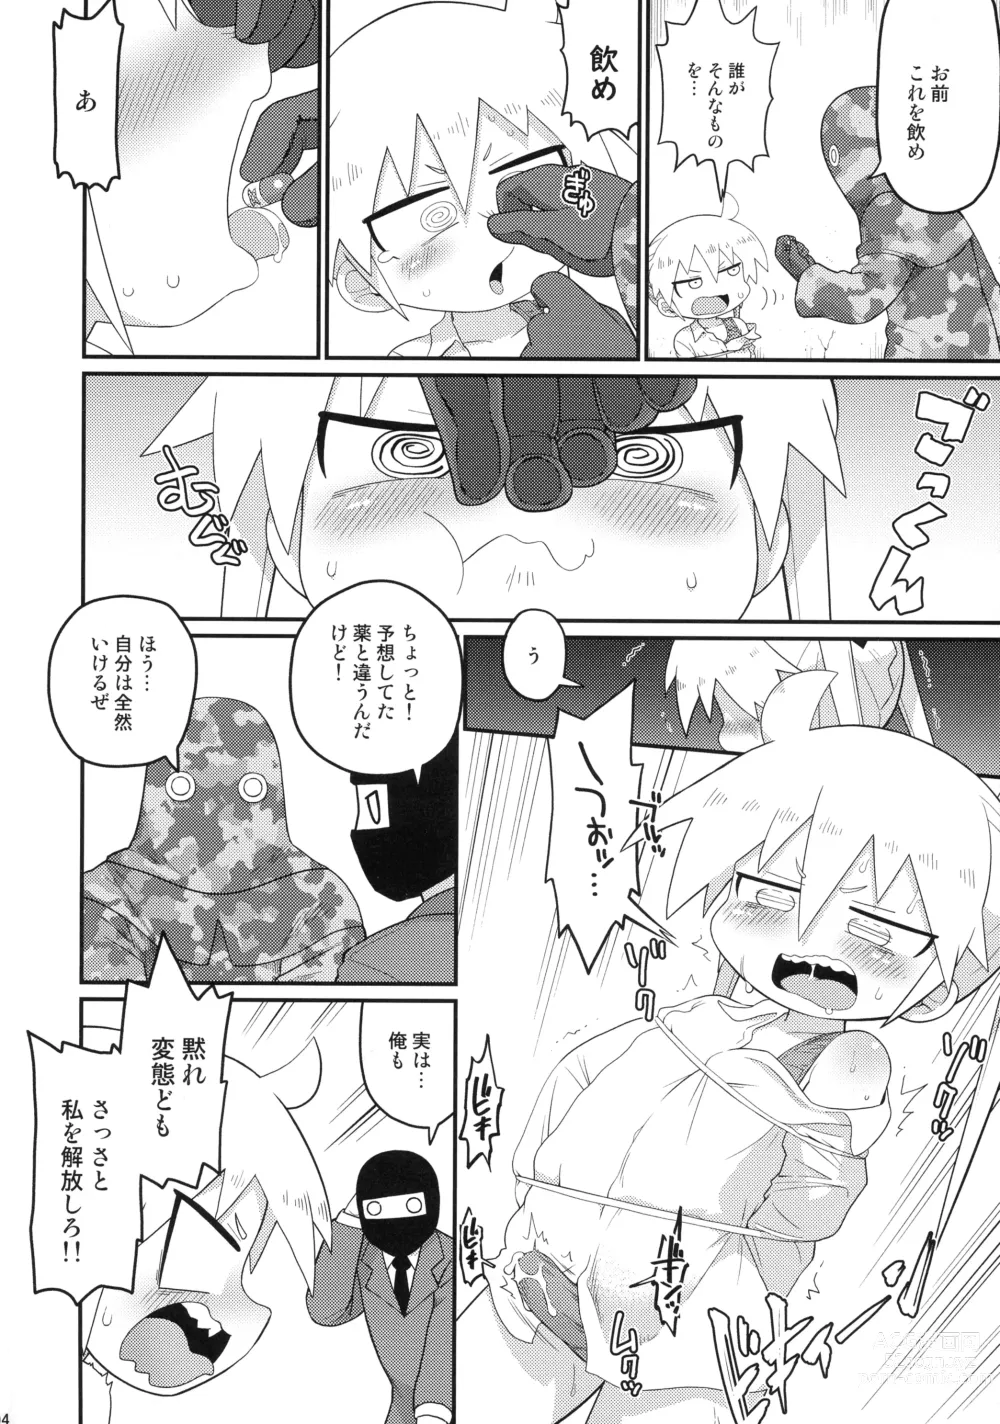 Page 4 of doujinshi Hekoheko Sonya to Chichideka Agiri